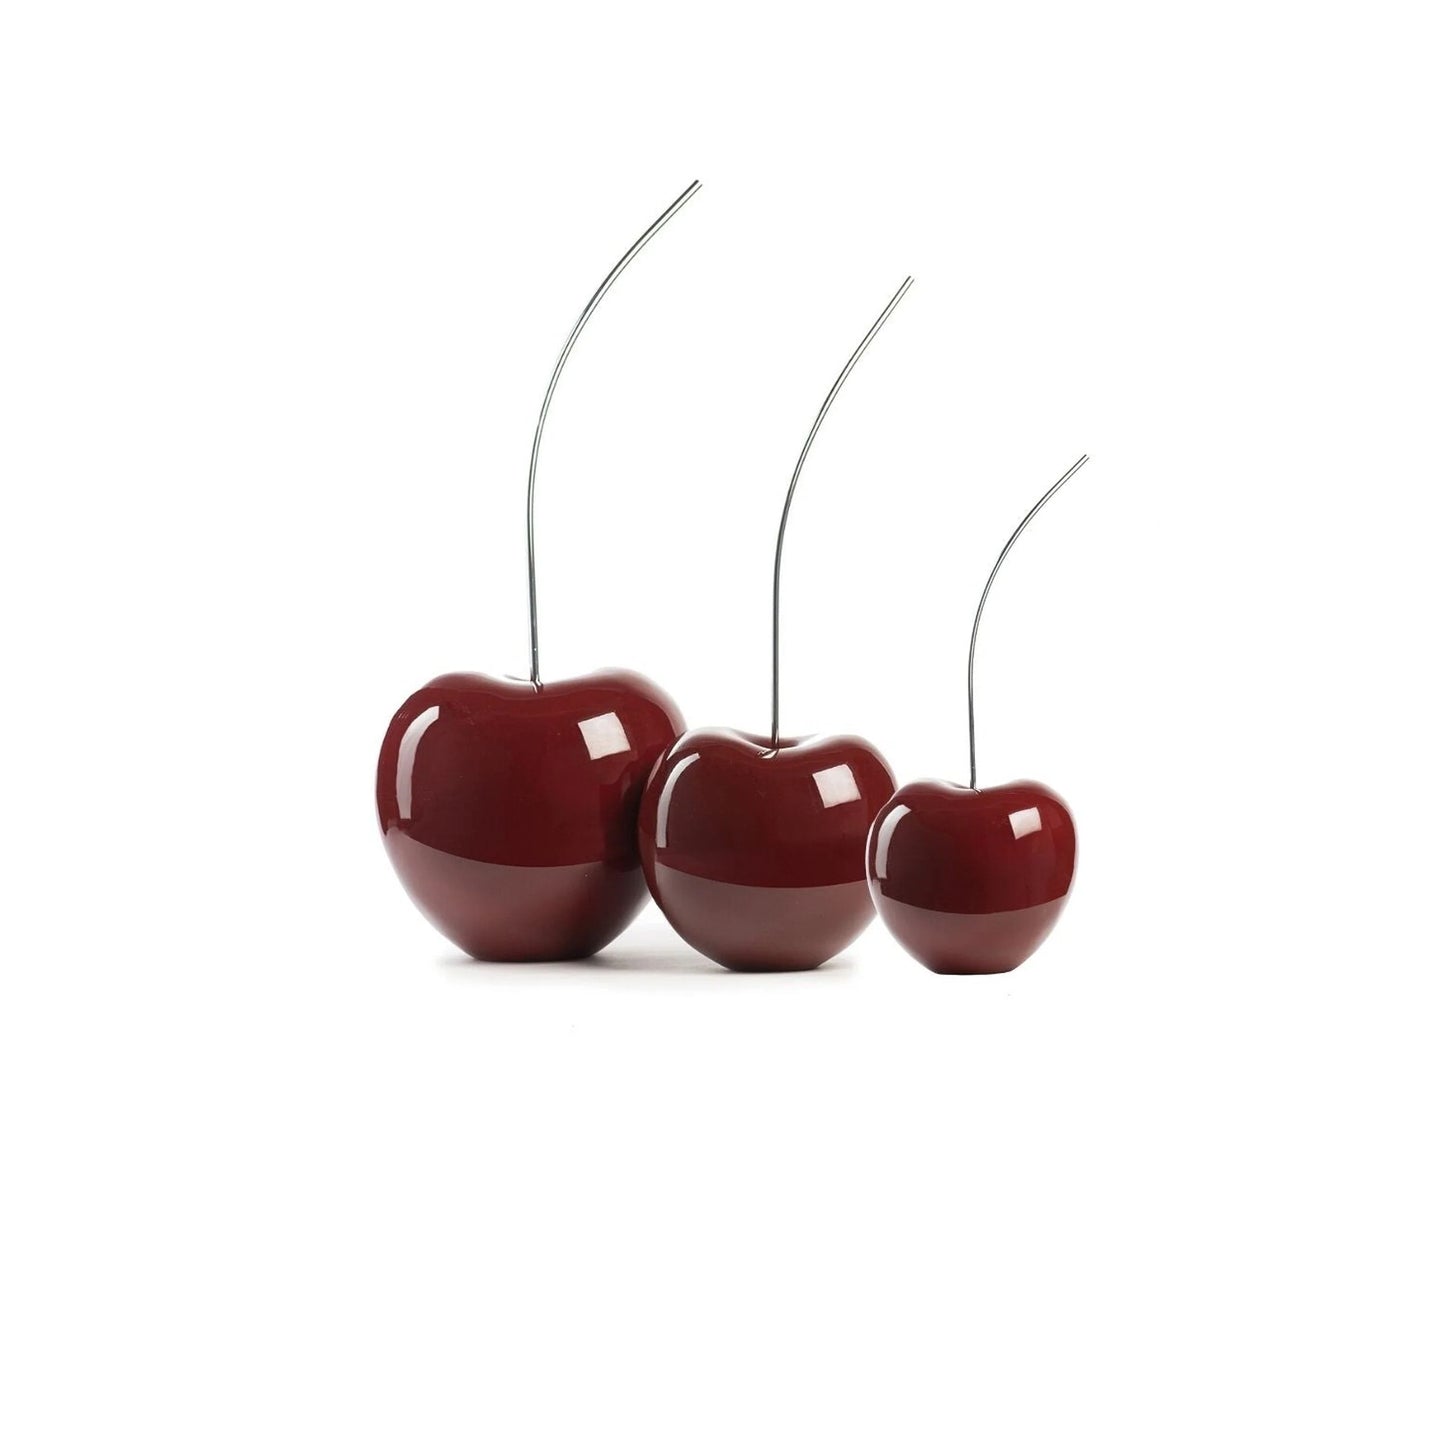 Finesse Decor Three Cherries Sculpture in Red Winde